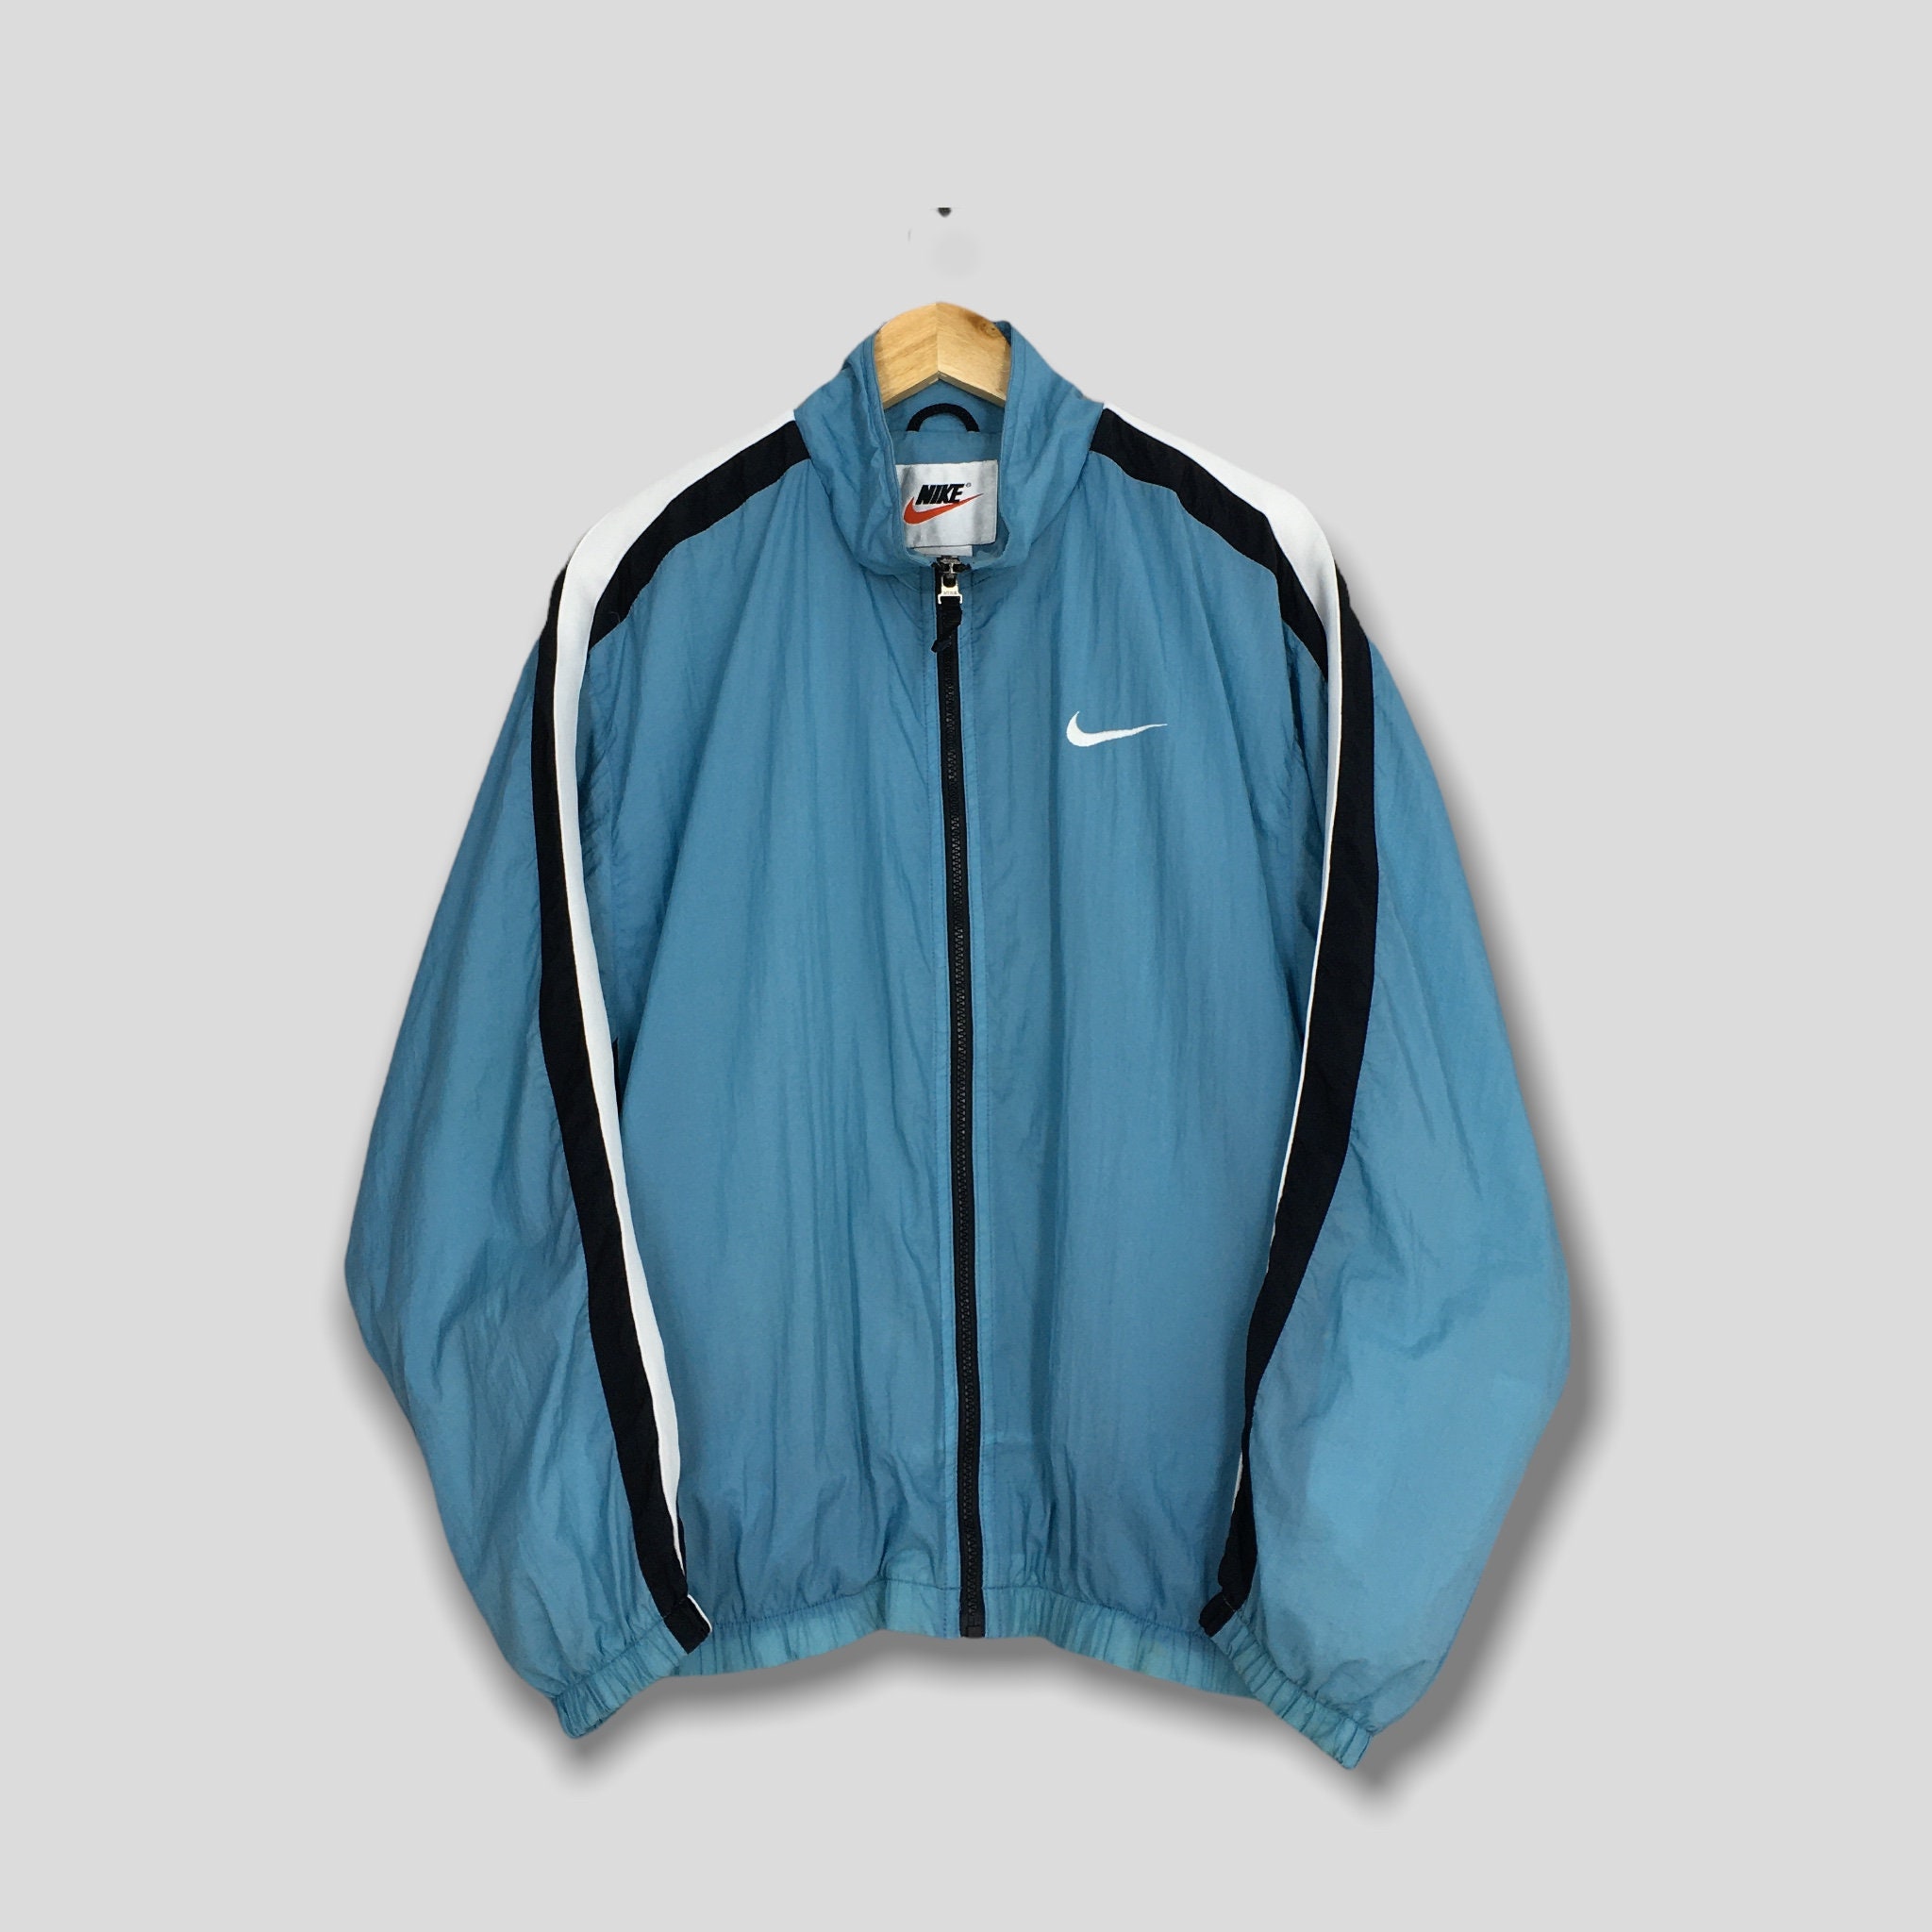 Vintage 90's Nike Swoosh Blue Windbreaker Jacket - Australia